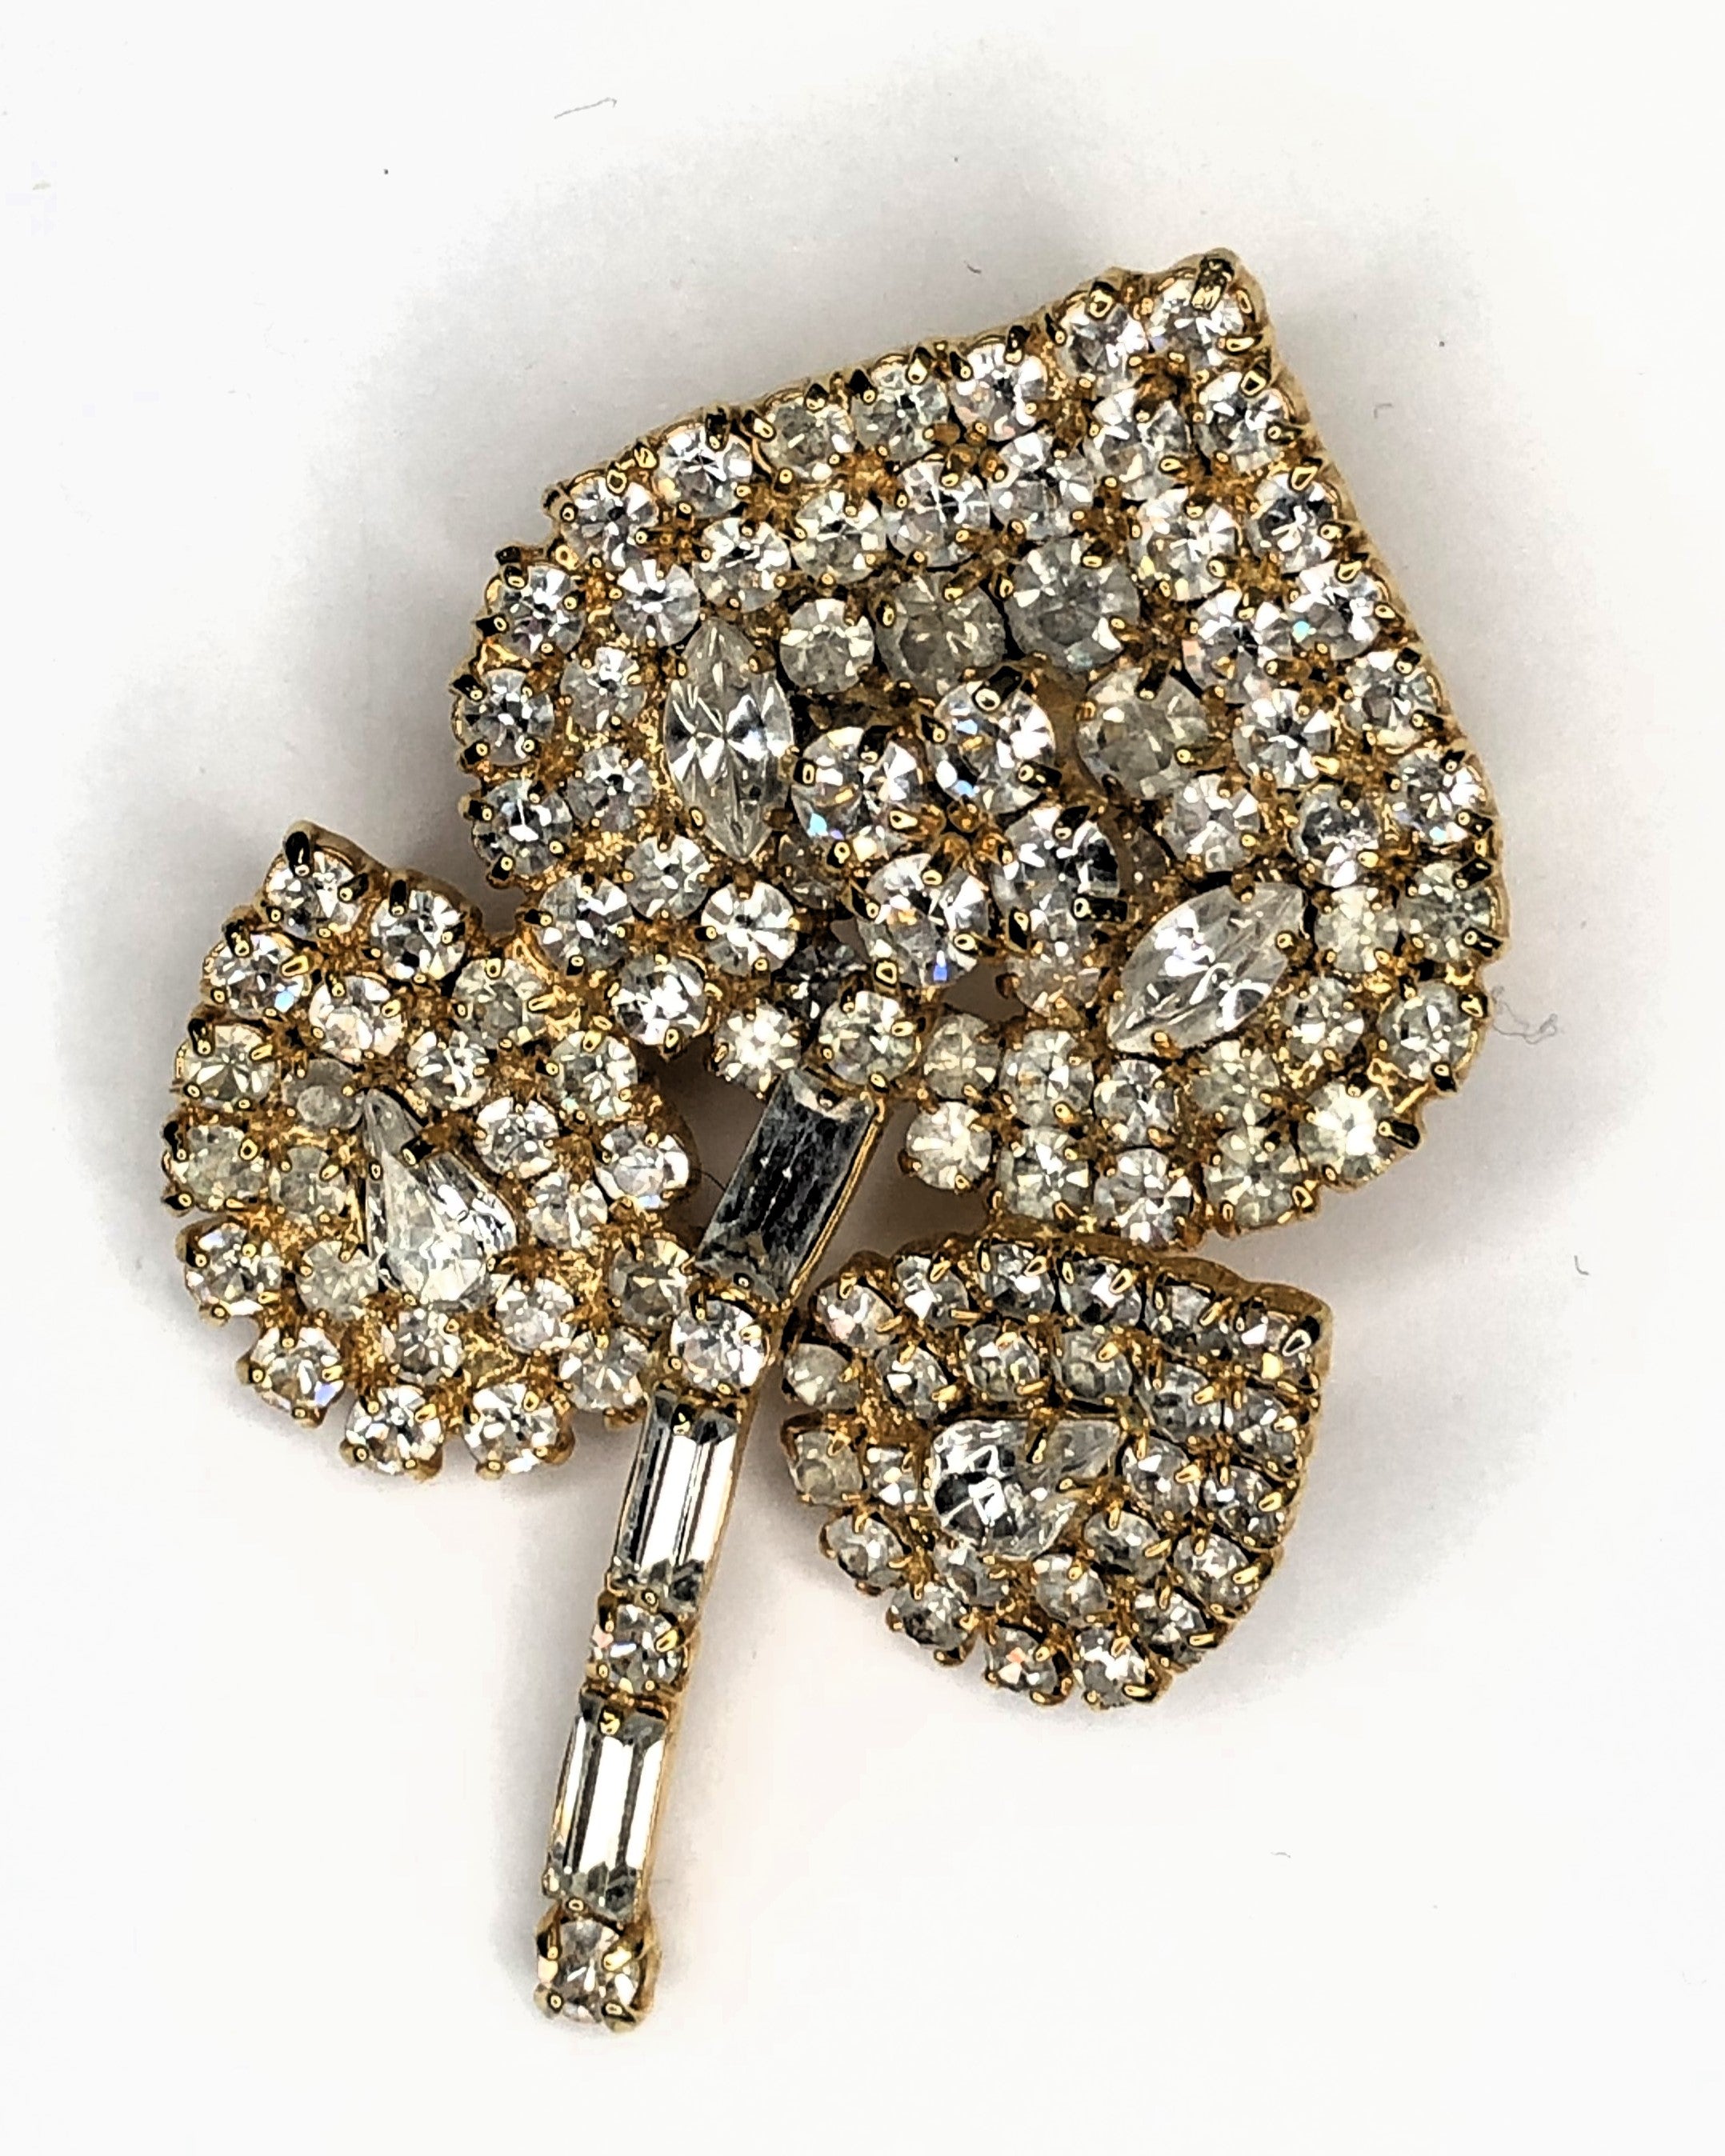 Gold diamante flower brooch at erika